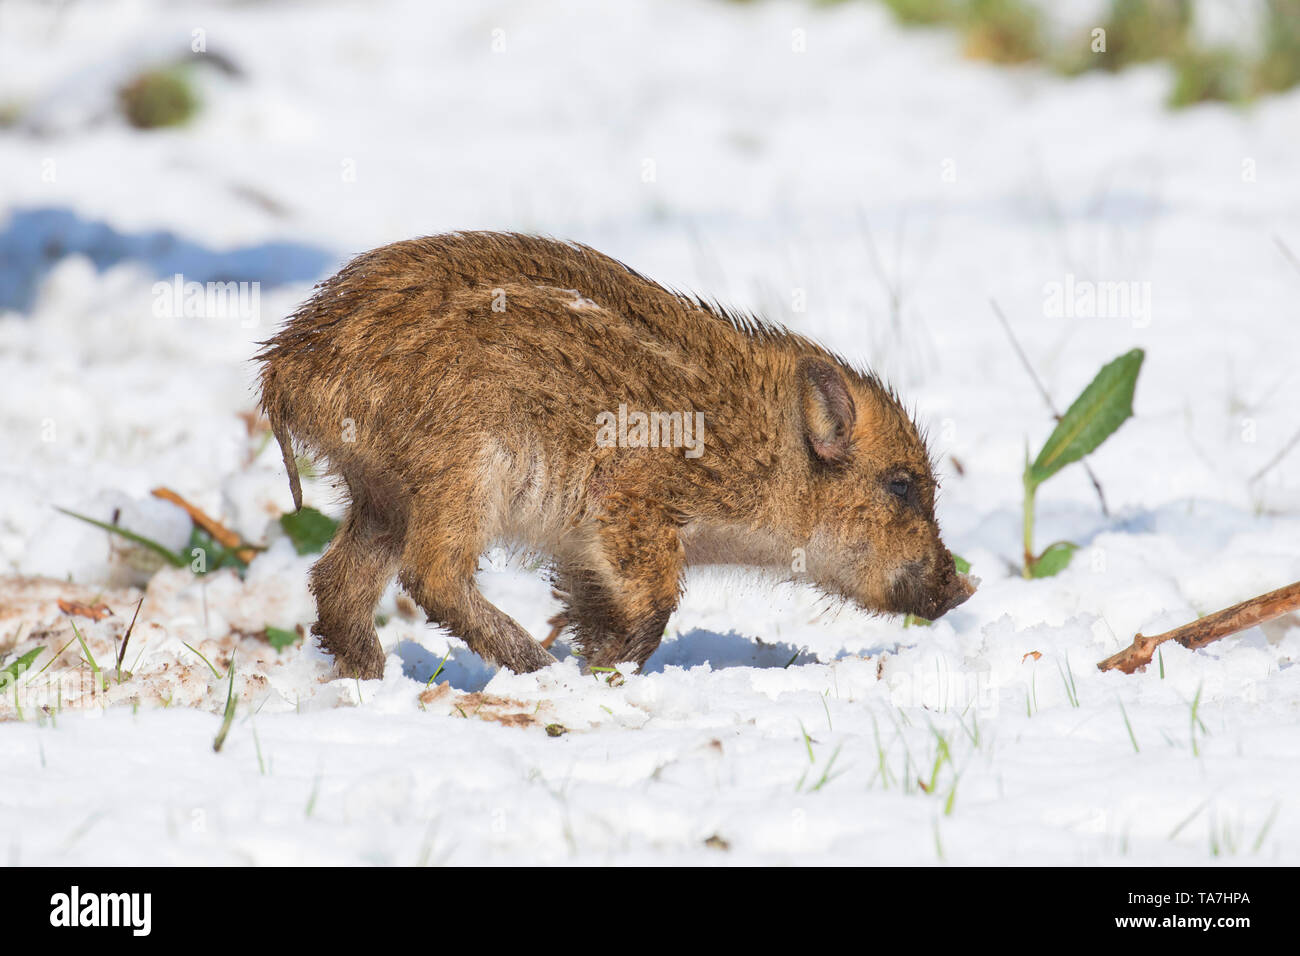 Wild Boar (Sus scrofa). Piglet standing in snow. Germany Stock Photo